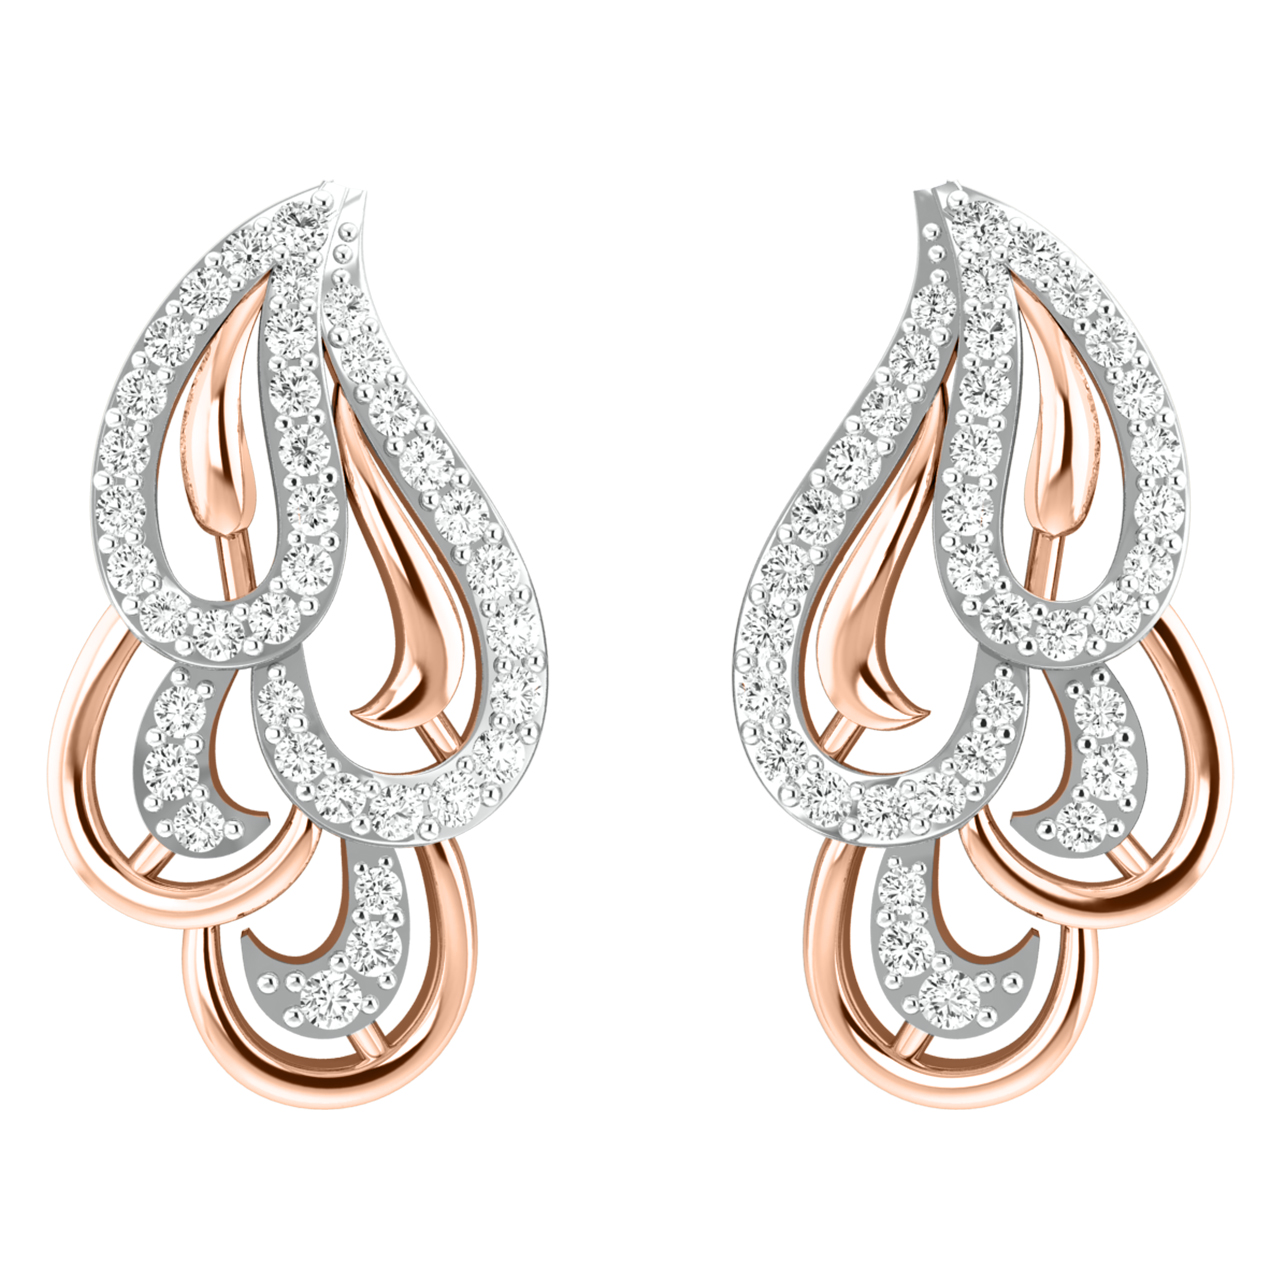 The Marina Diamond Earrings For Her